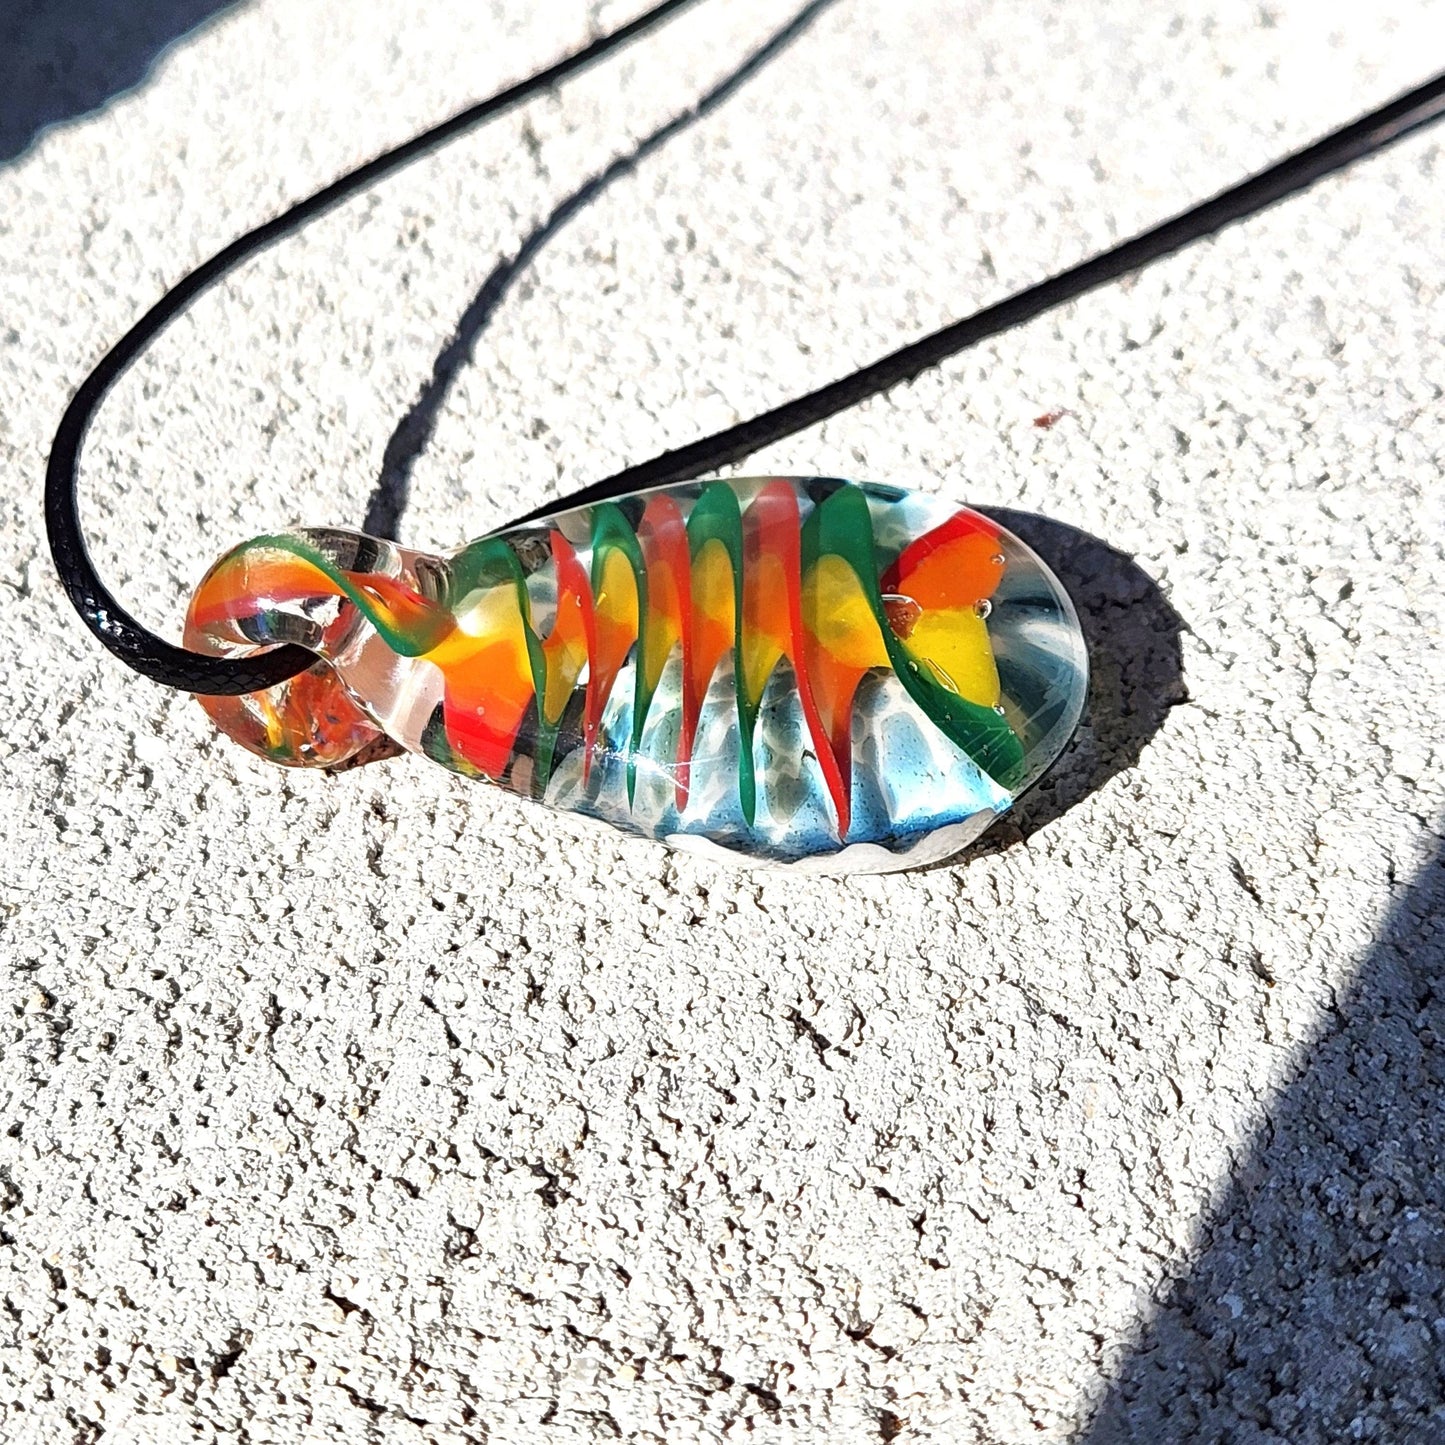 Handmade Heady Glass Pendant Necklace Rainbow Swirl DragonFireGlass